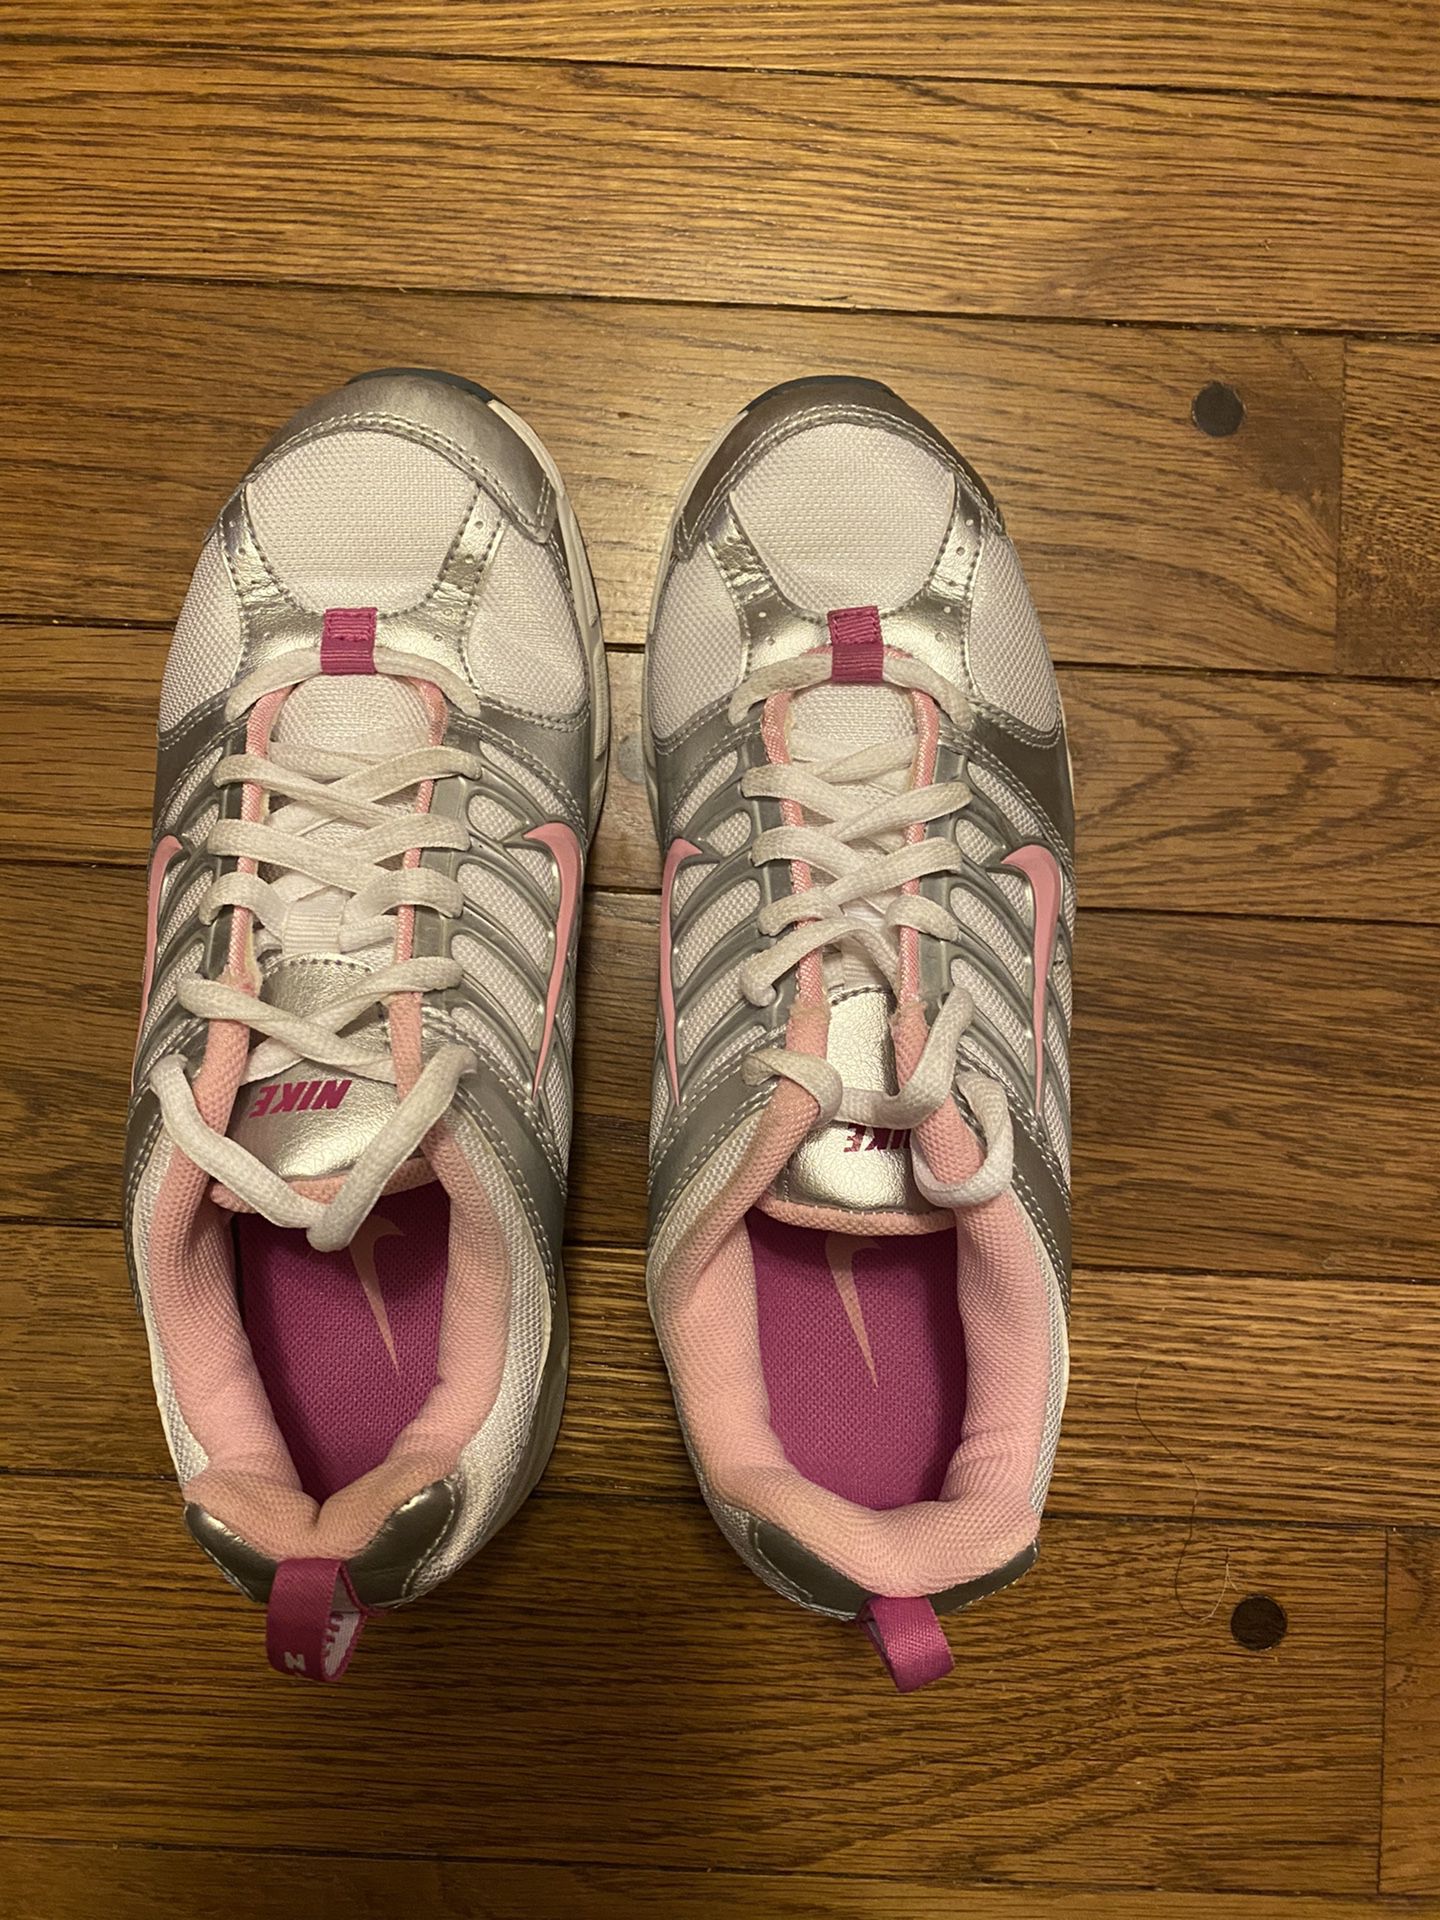 Women’s like new Nike tennis shoe, size 5.5